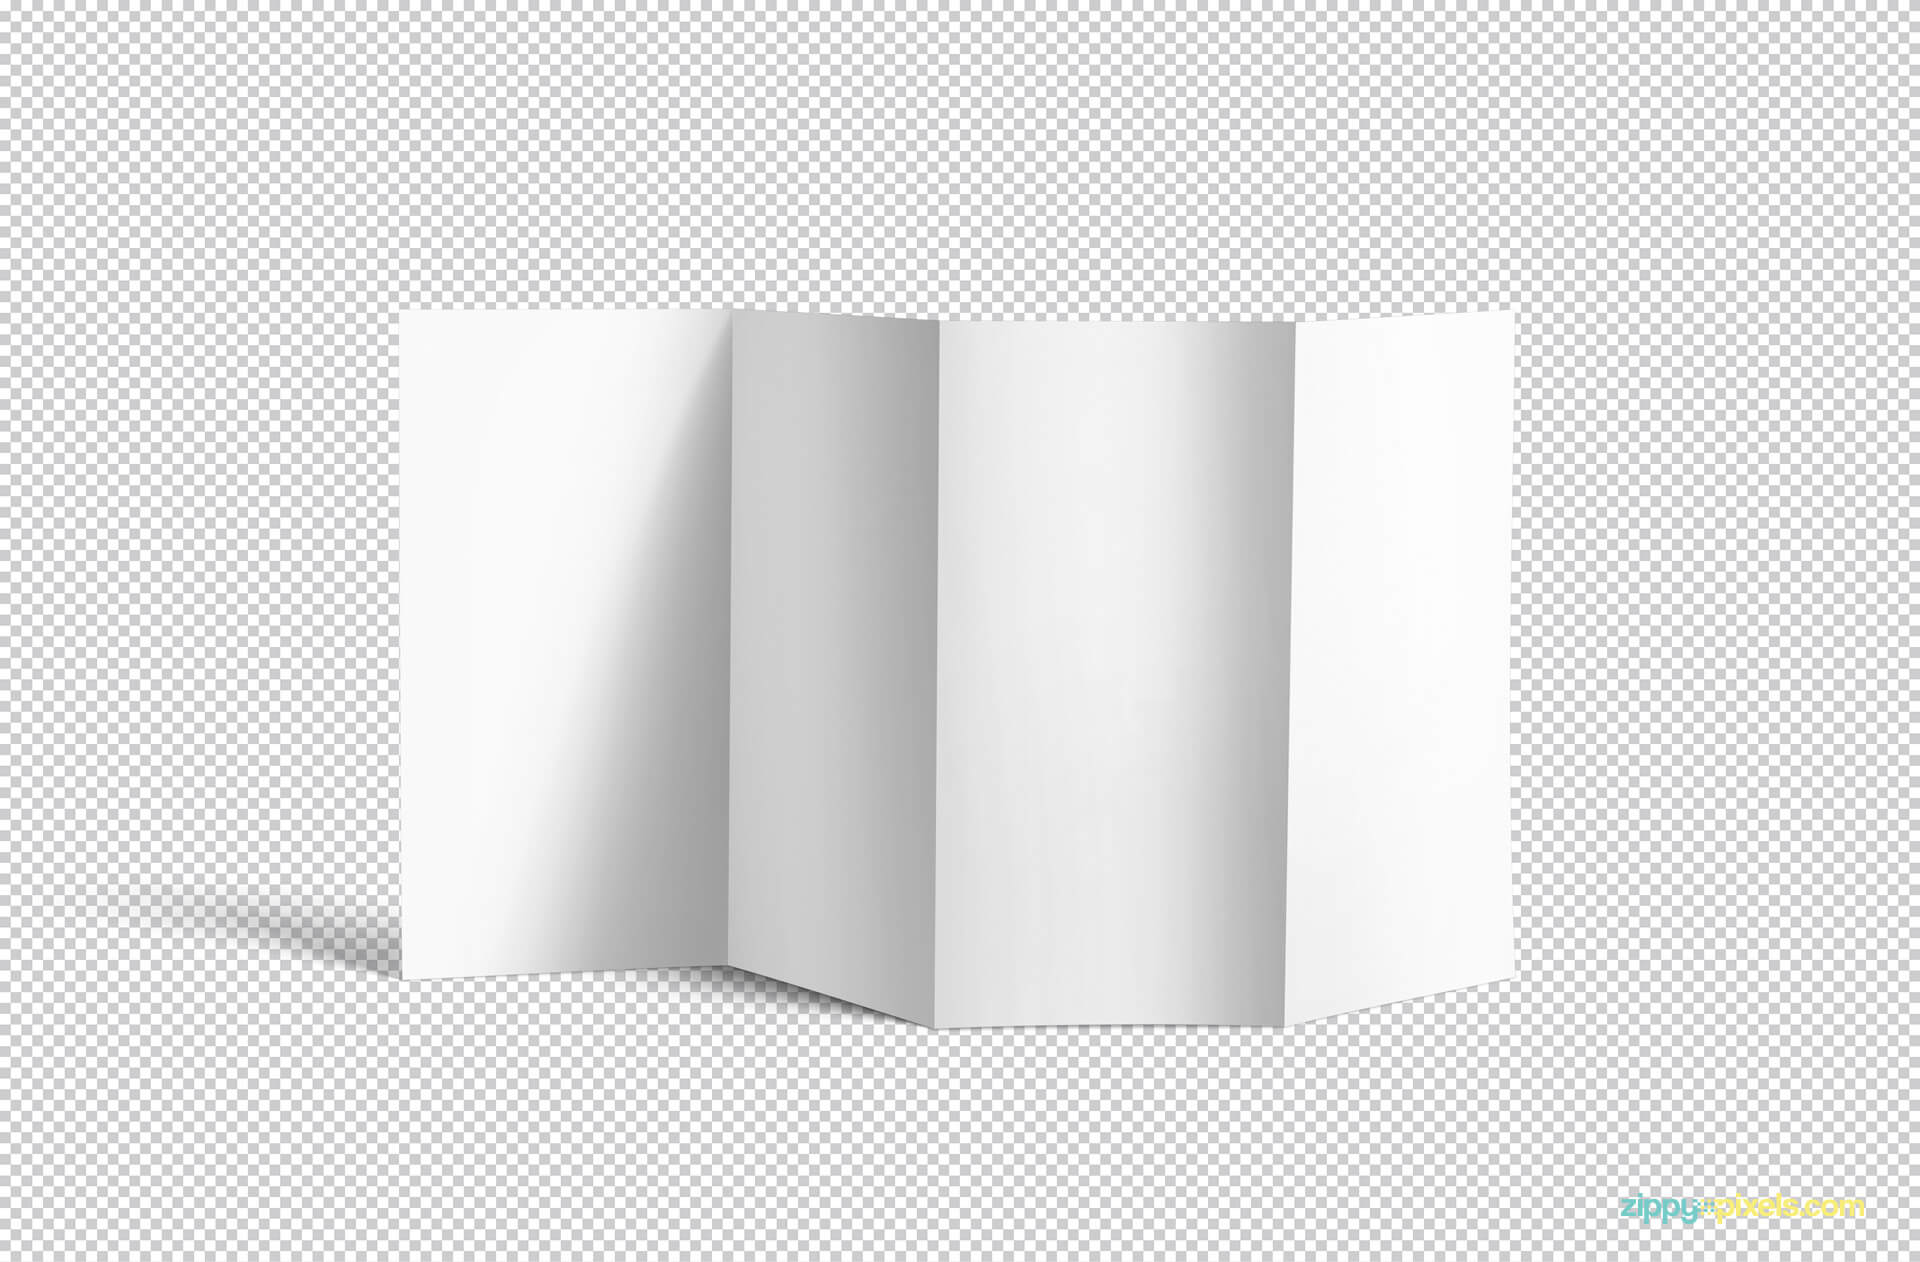 Free 4 Fold Brochure Mockup | Zippypixels Intended For 4 Fold Brochure Template Word